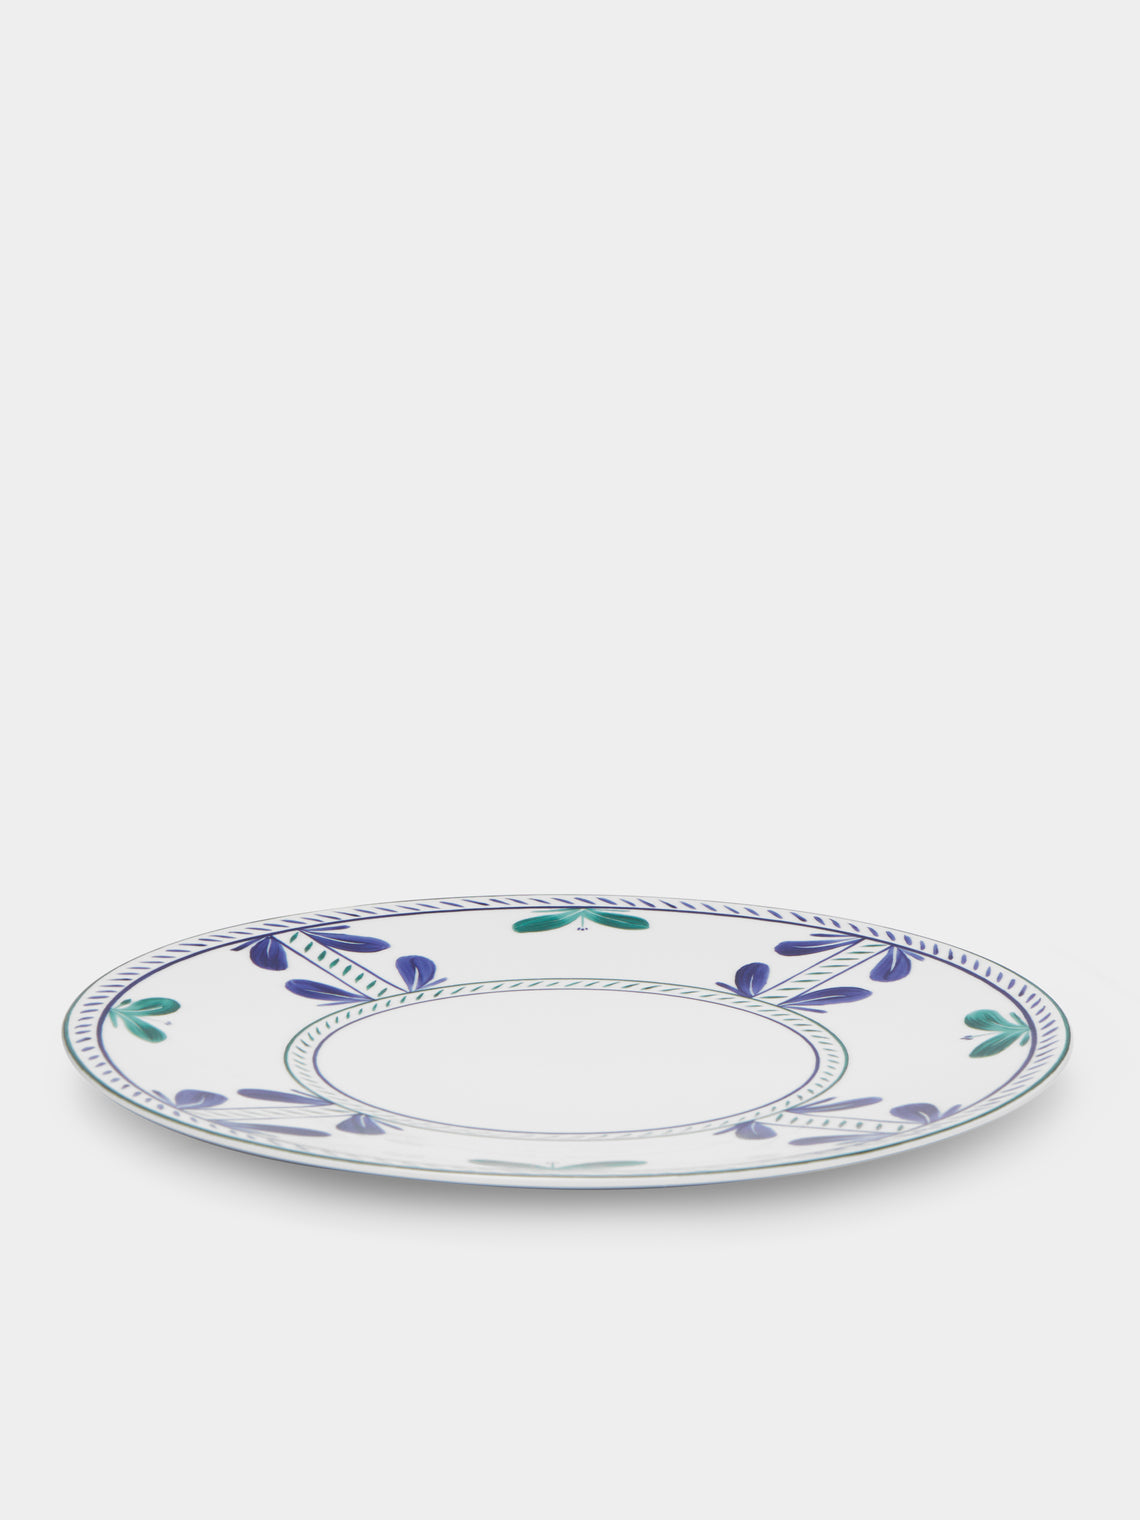 Molecot - Sevilla Porcelain Charger Plates (Set of 4) -  - ABASK